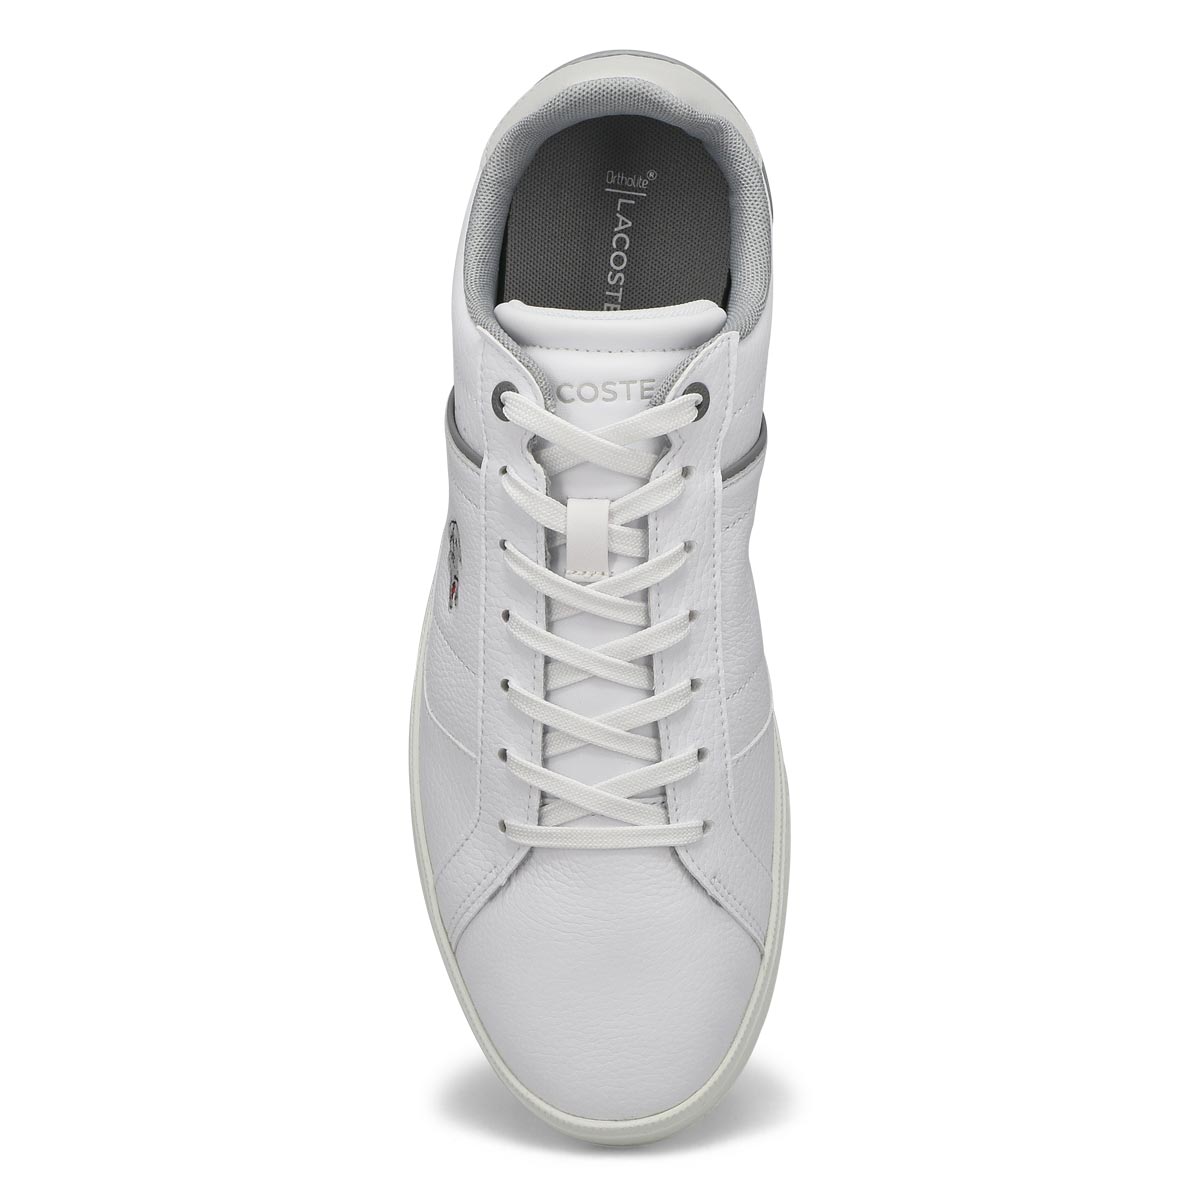 Men's Europa Pro Fashion Sneaker - White/Grey